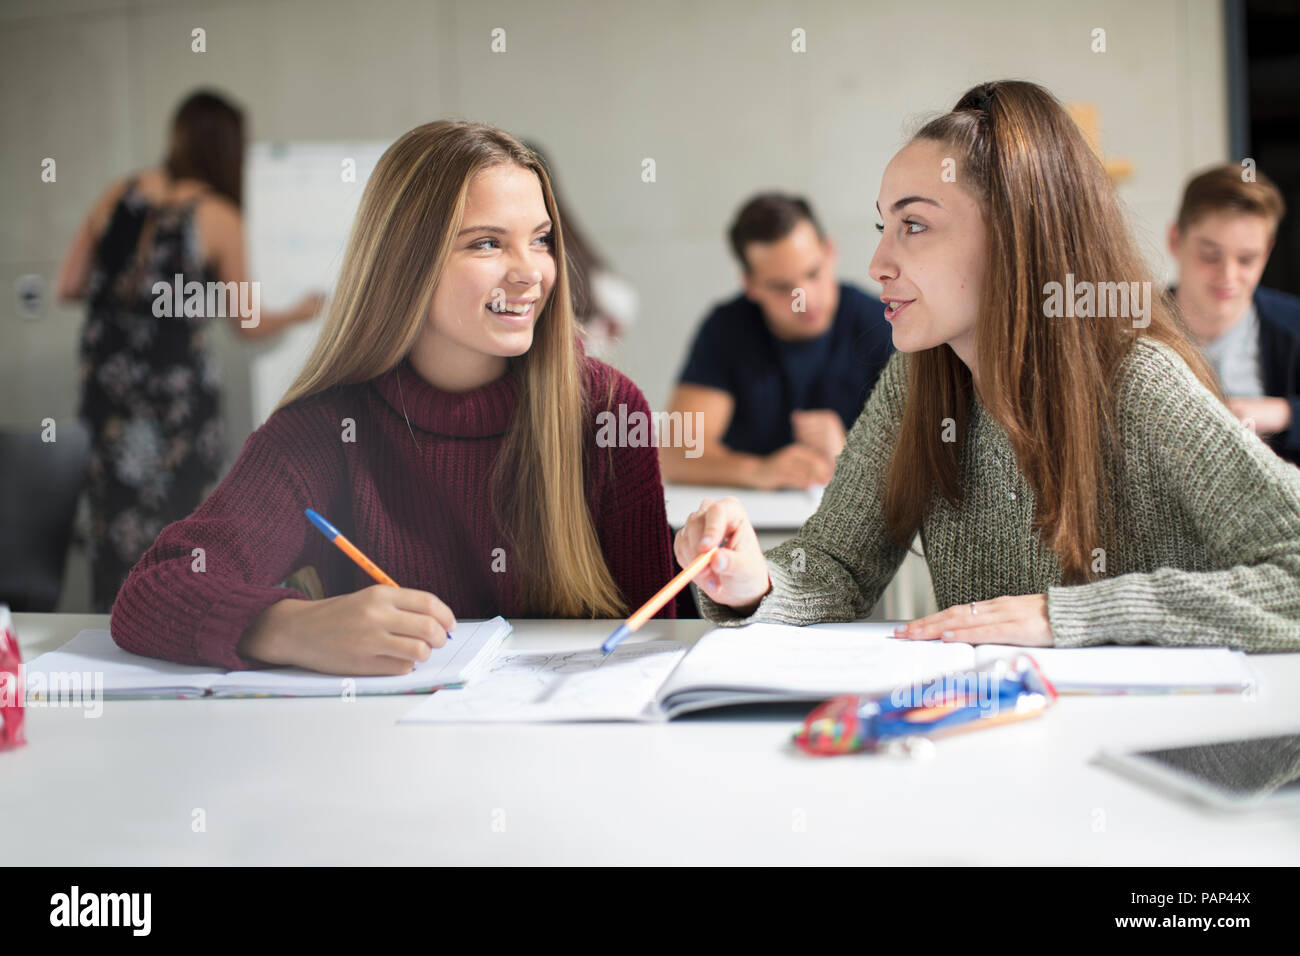 Smiling teenage girls talking in class Stock Photo - Alamy